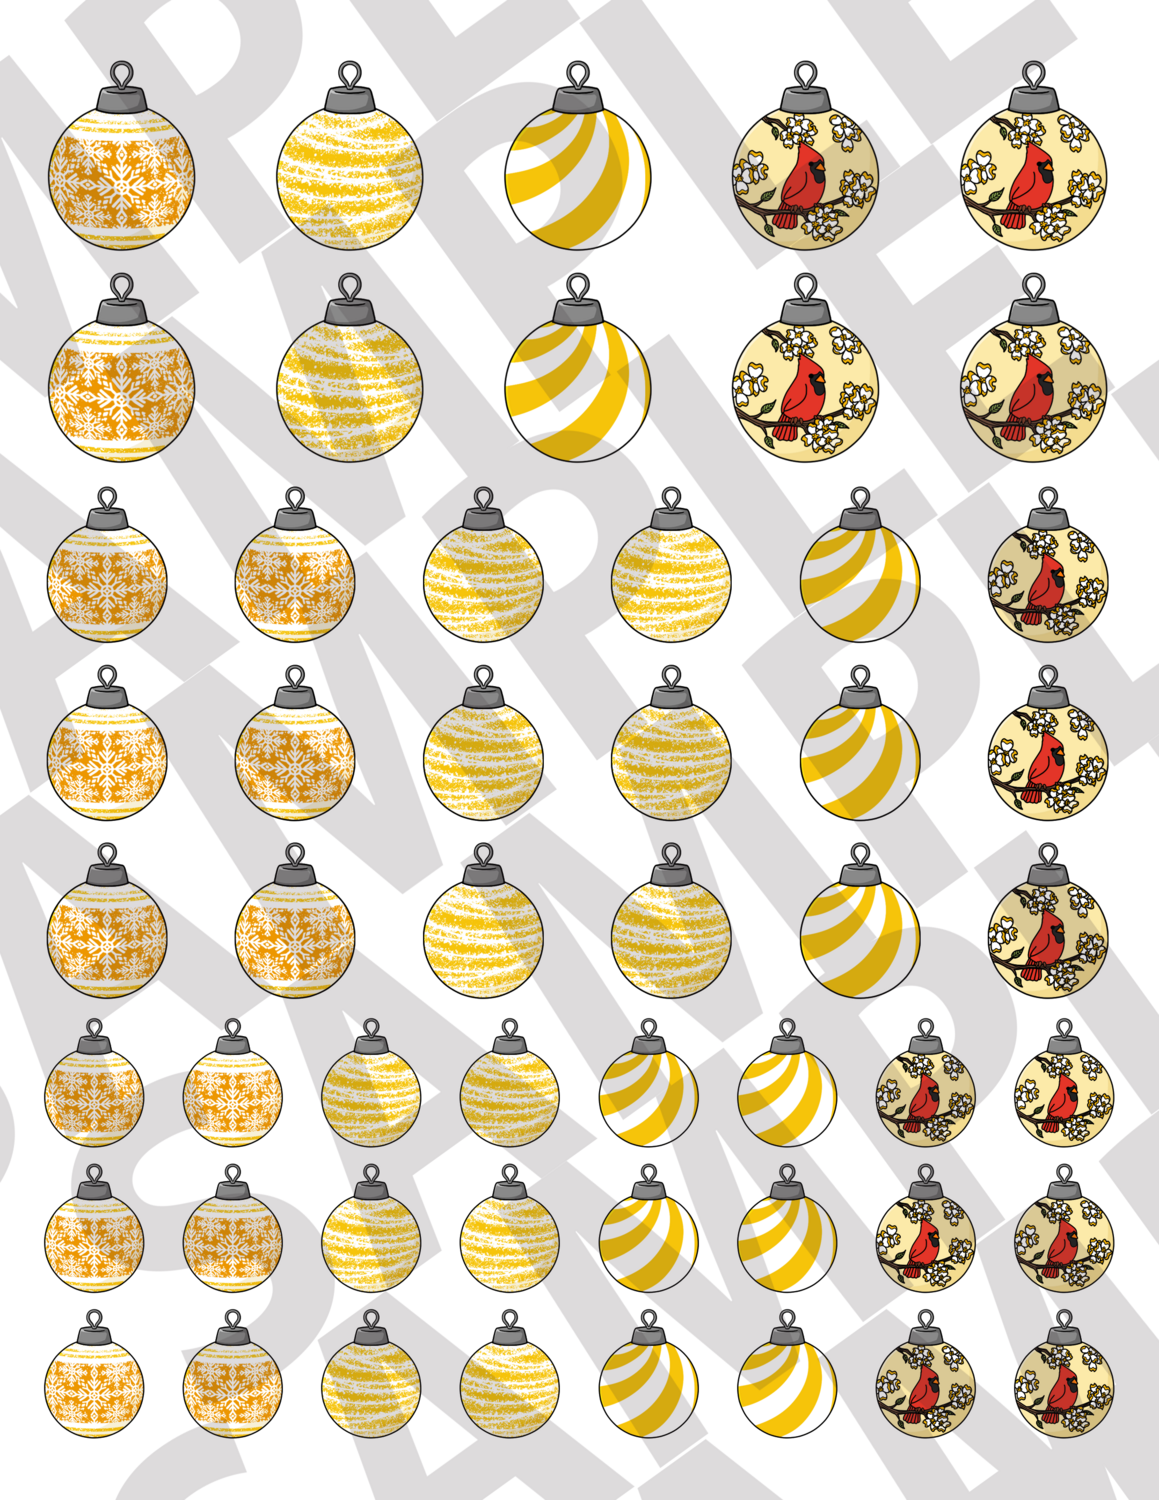 Light Yellow - Smaller Ornaments